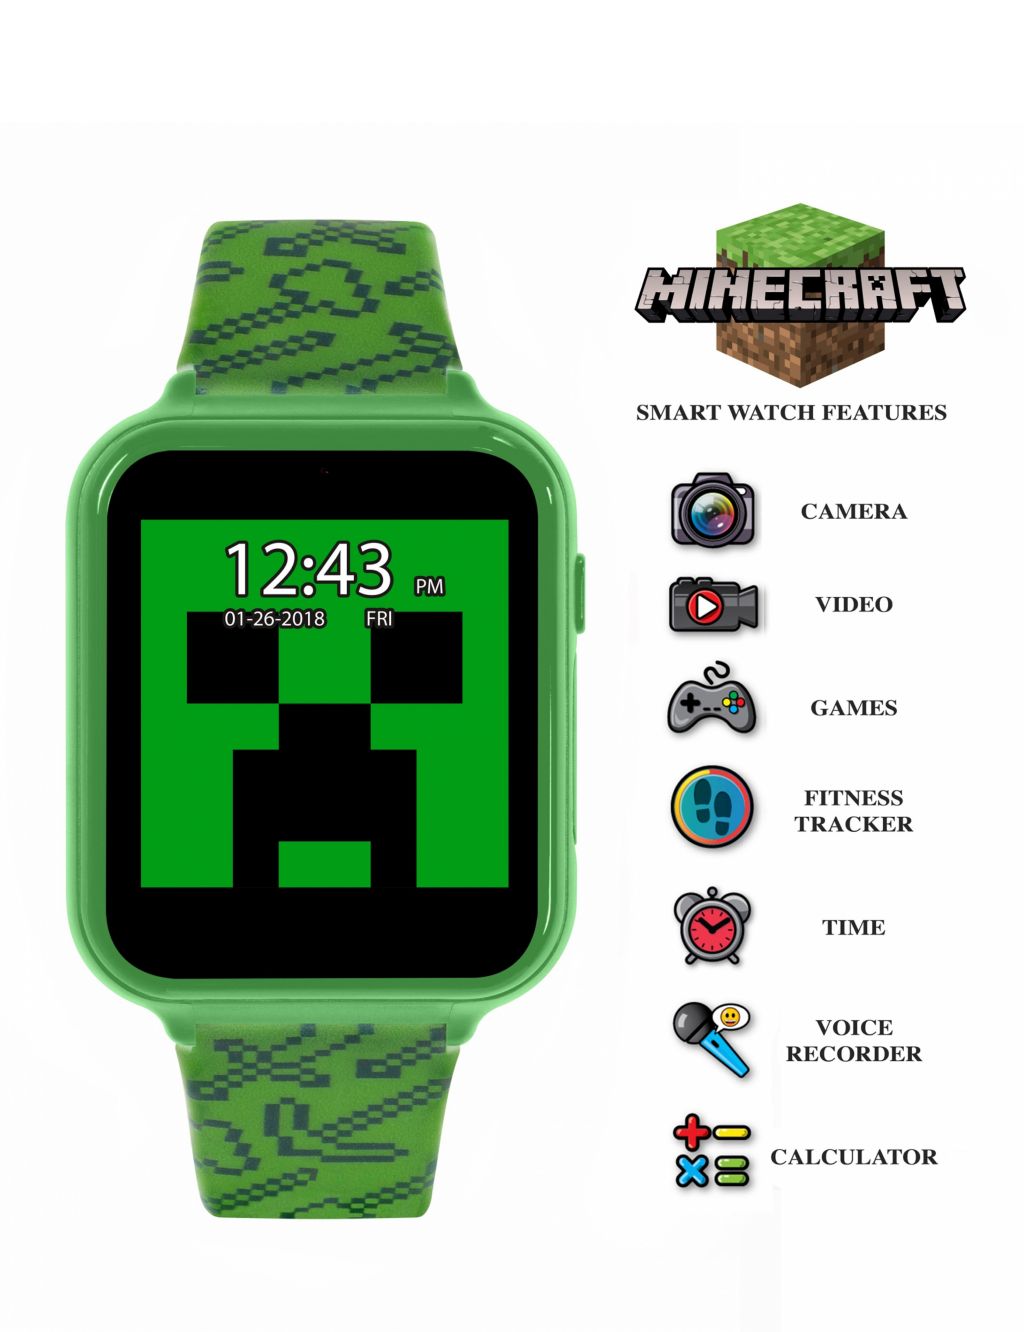 Minecraft Fitness Tracker Smartwatch image 2